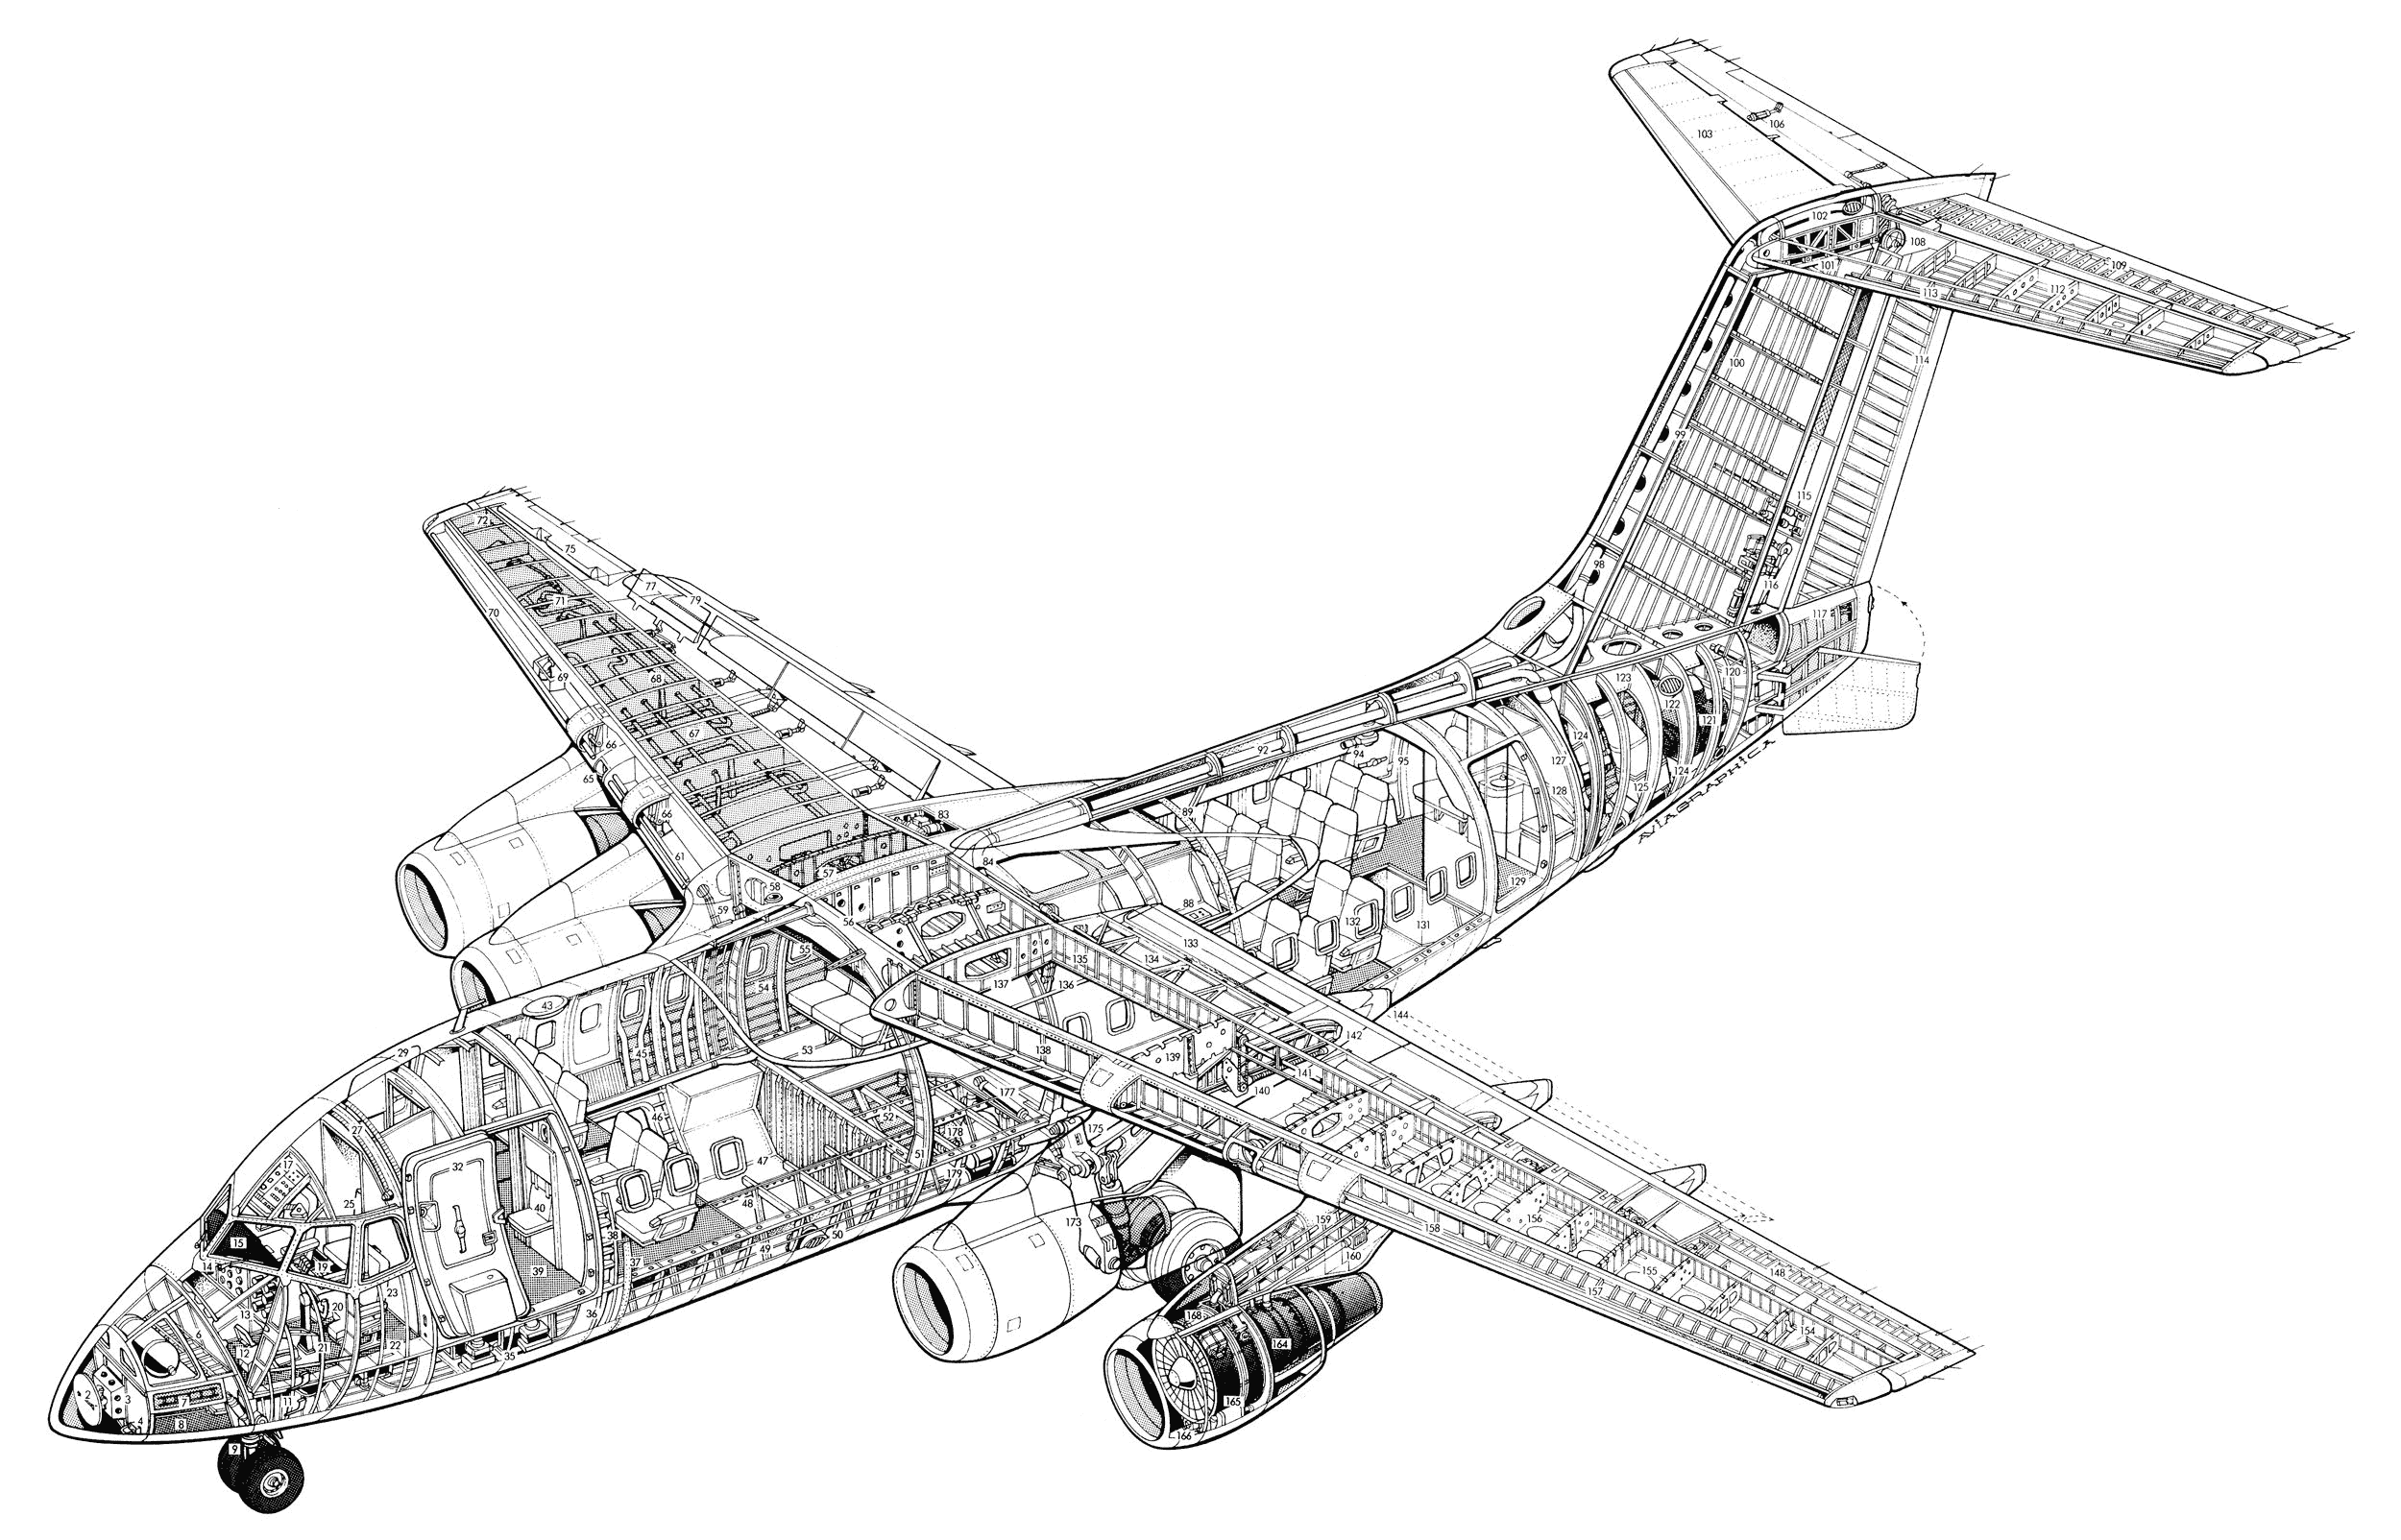 British Aerospace 146 cutaway